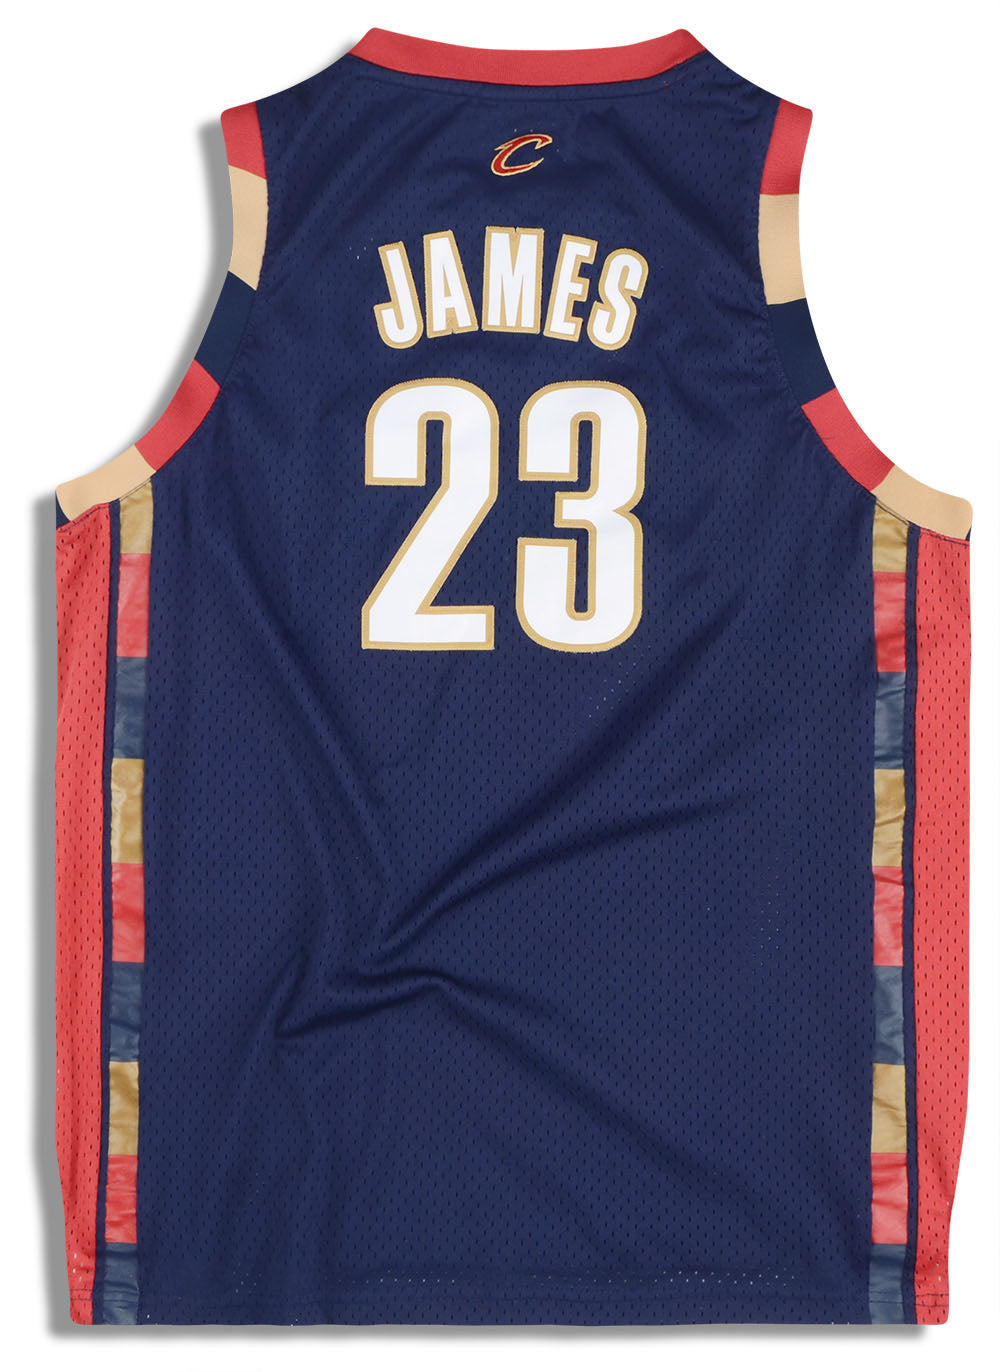 Lebron James #23 Signed Cleveland Cavaliers Adidas Game Model